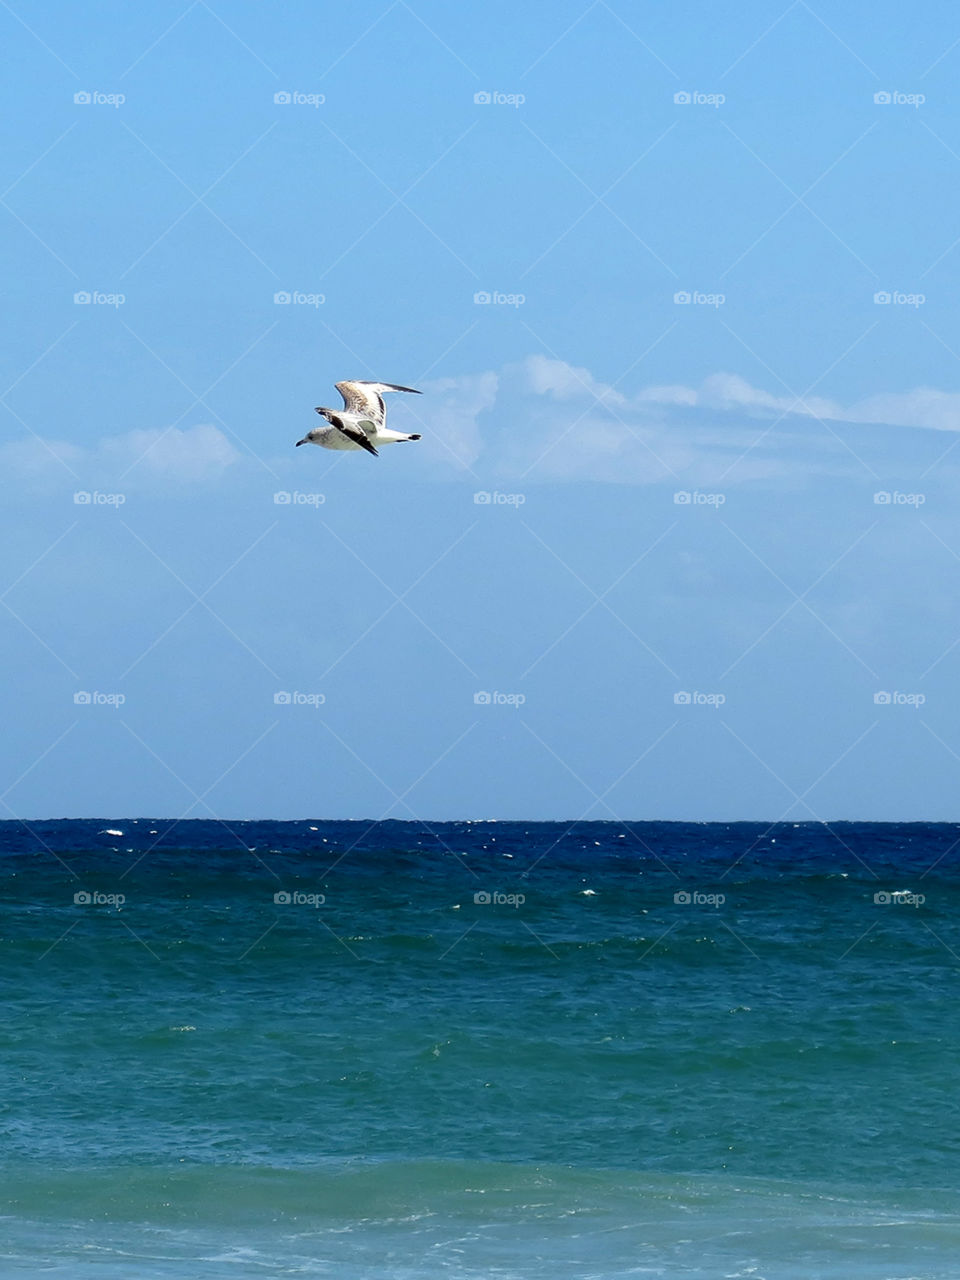 Freedom. Sea gull flying over ocean on beach